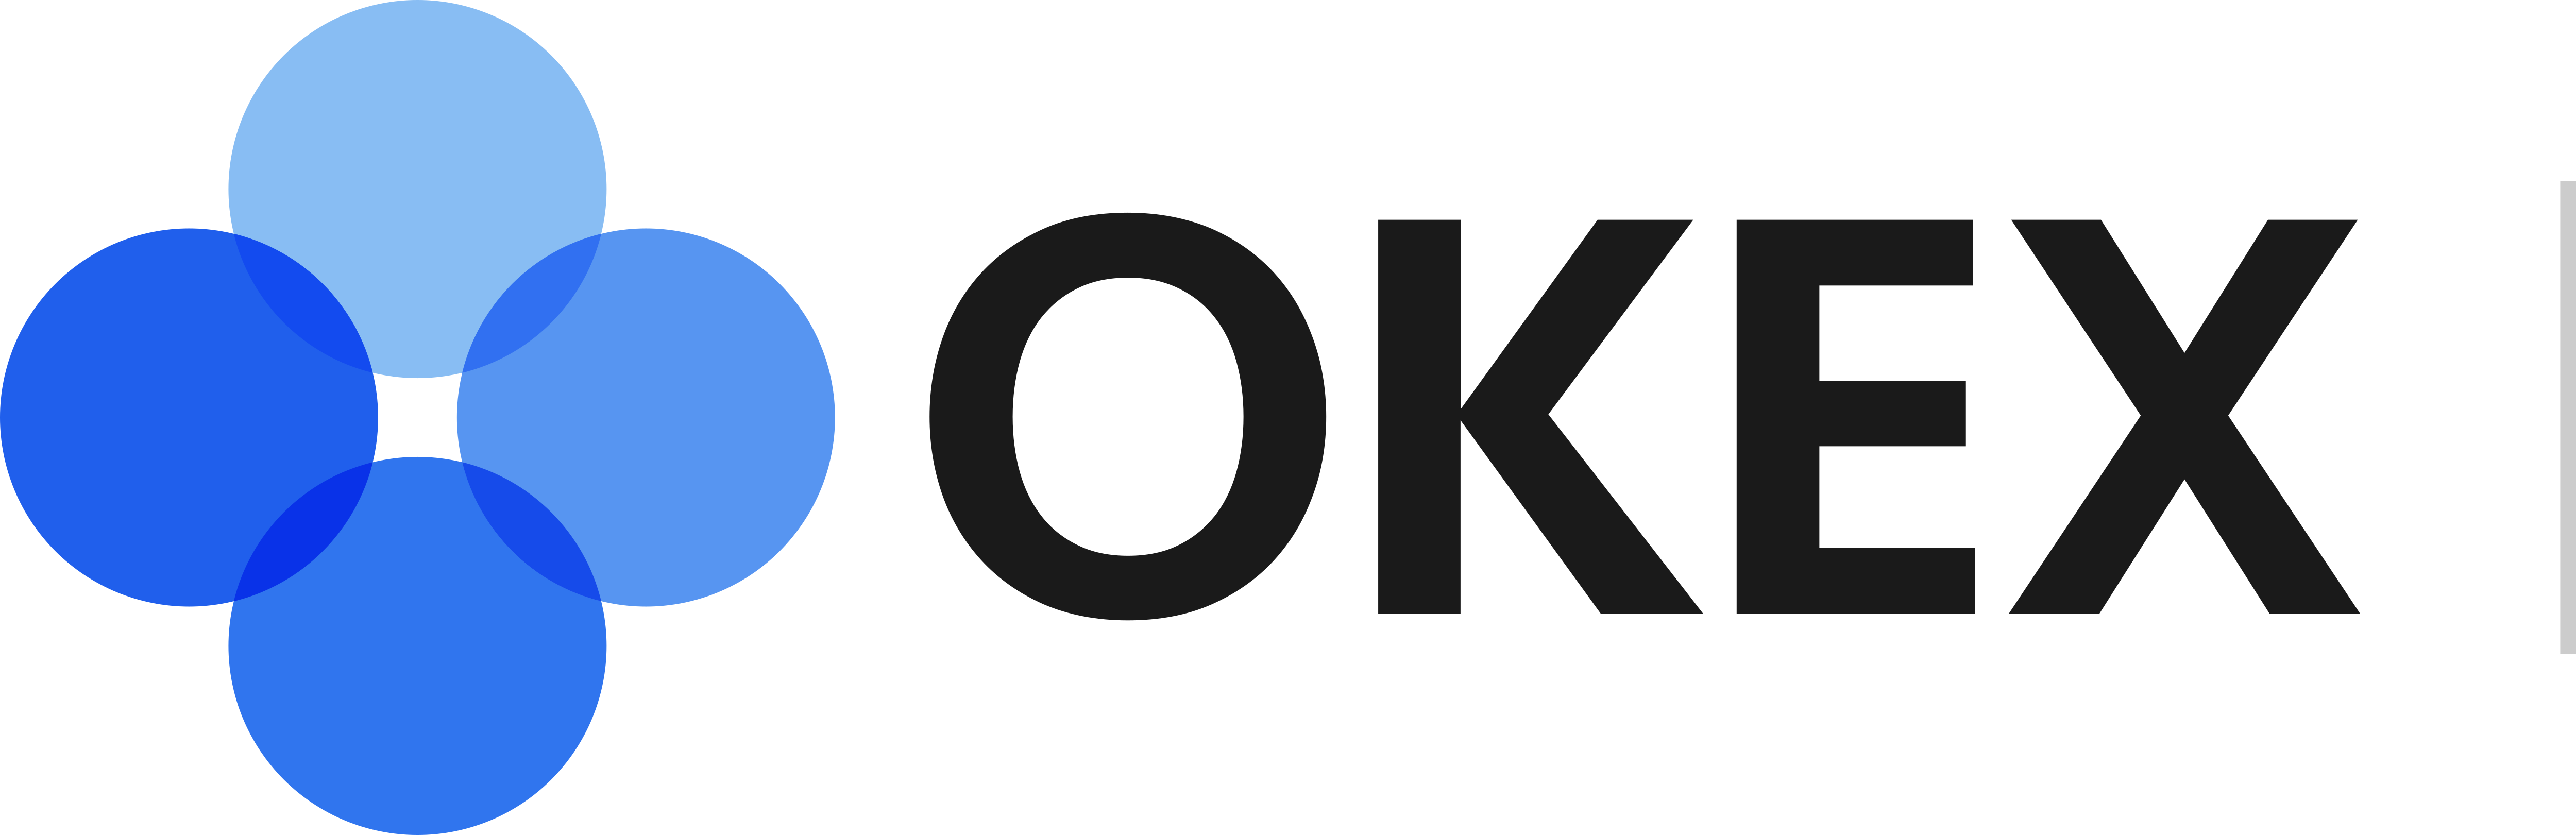 OKEX Wallet Logo